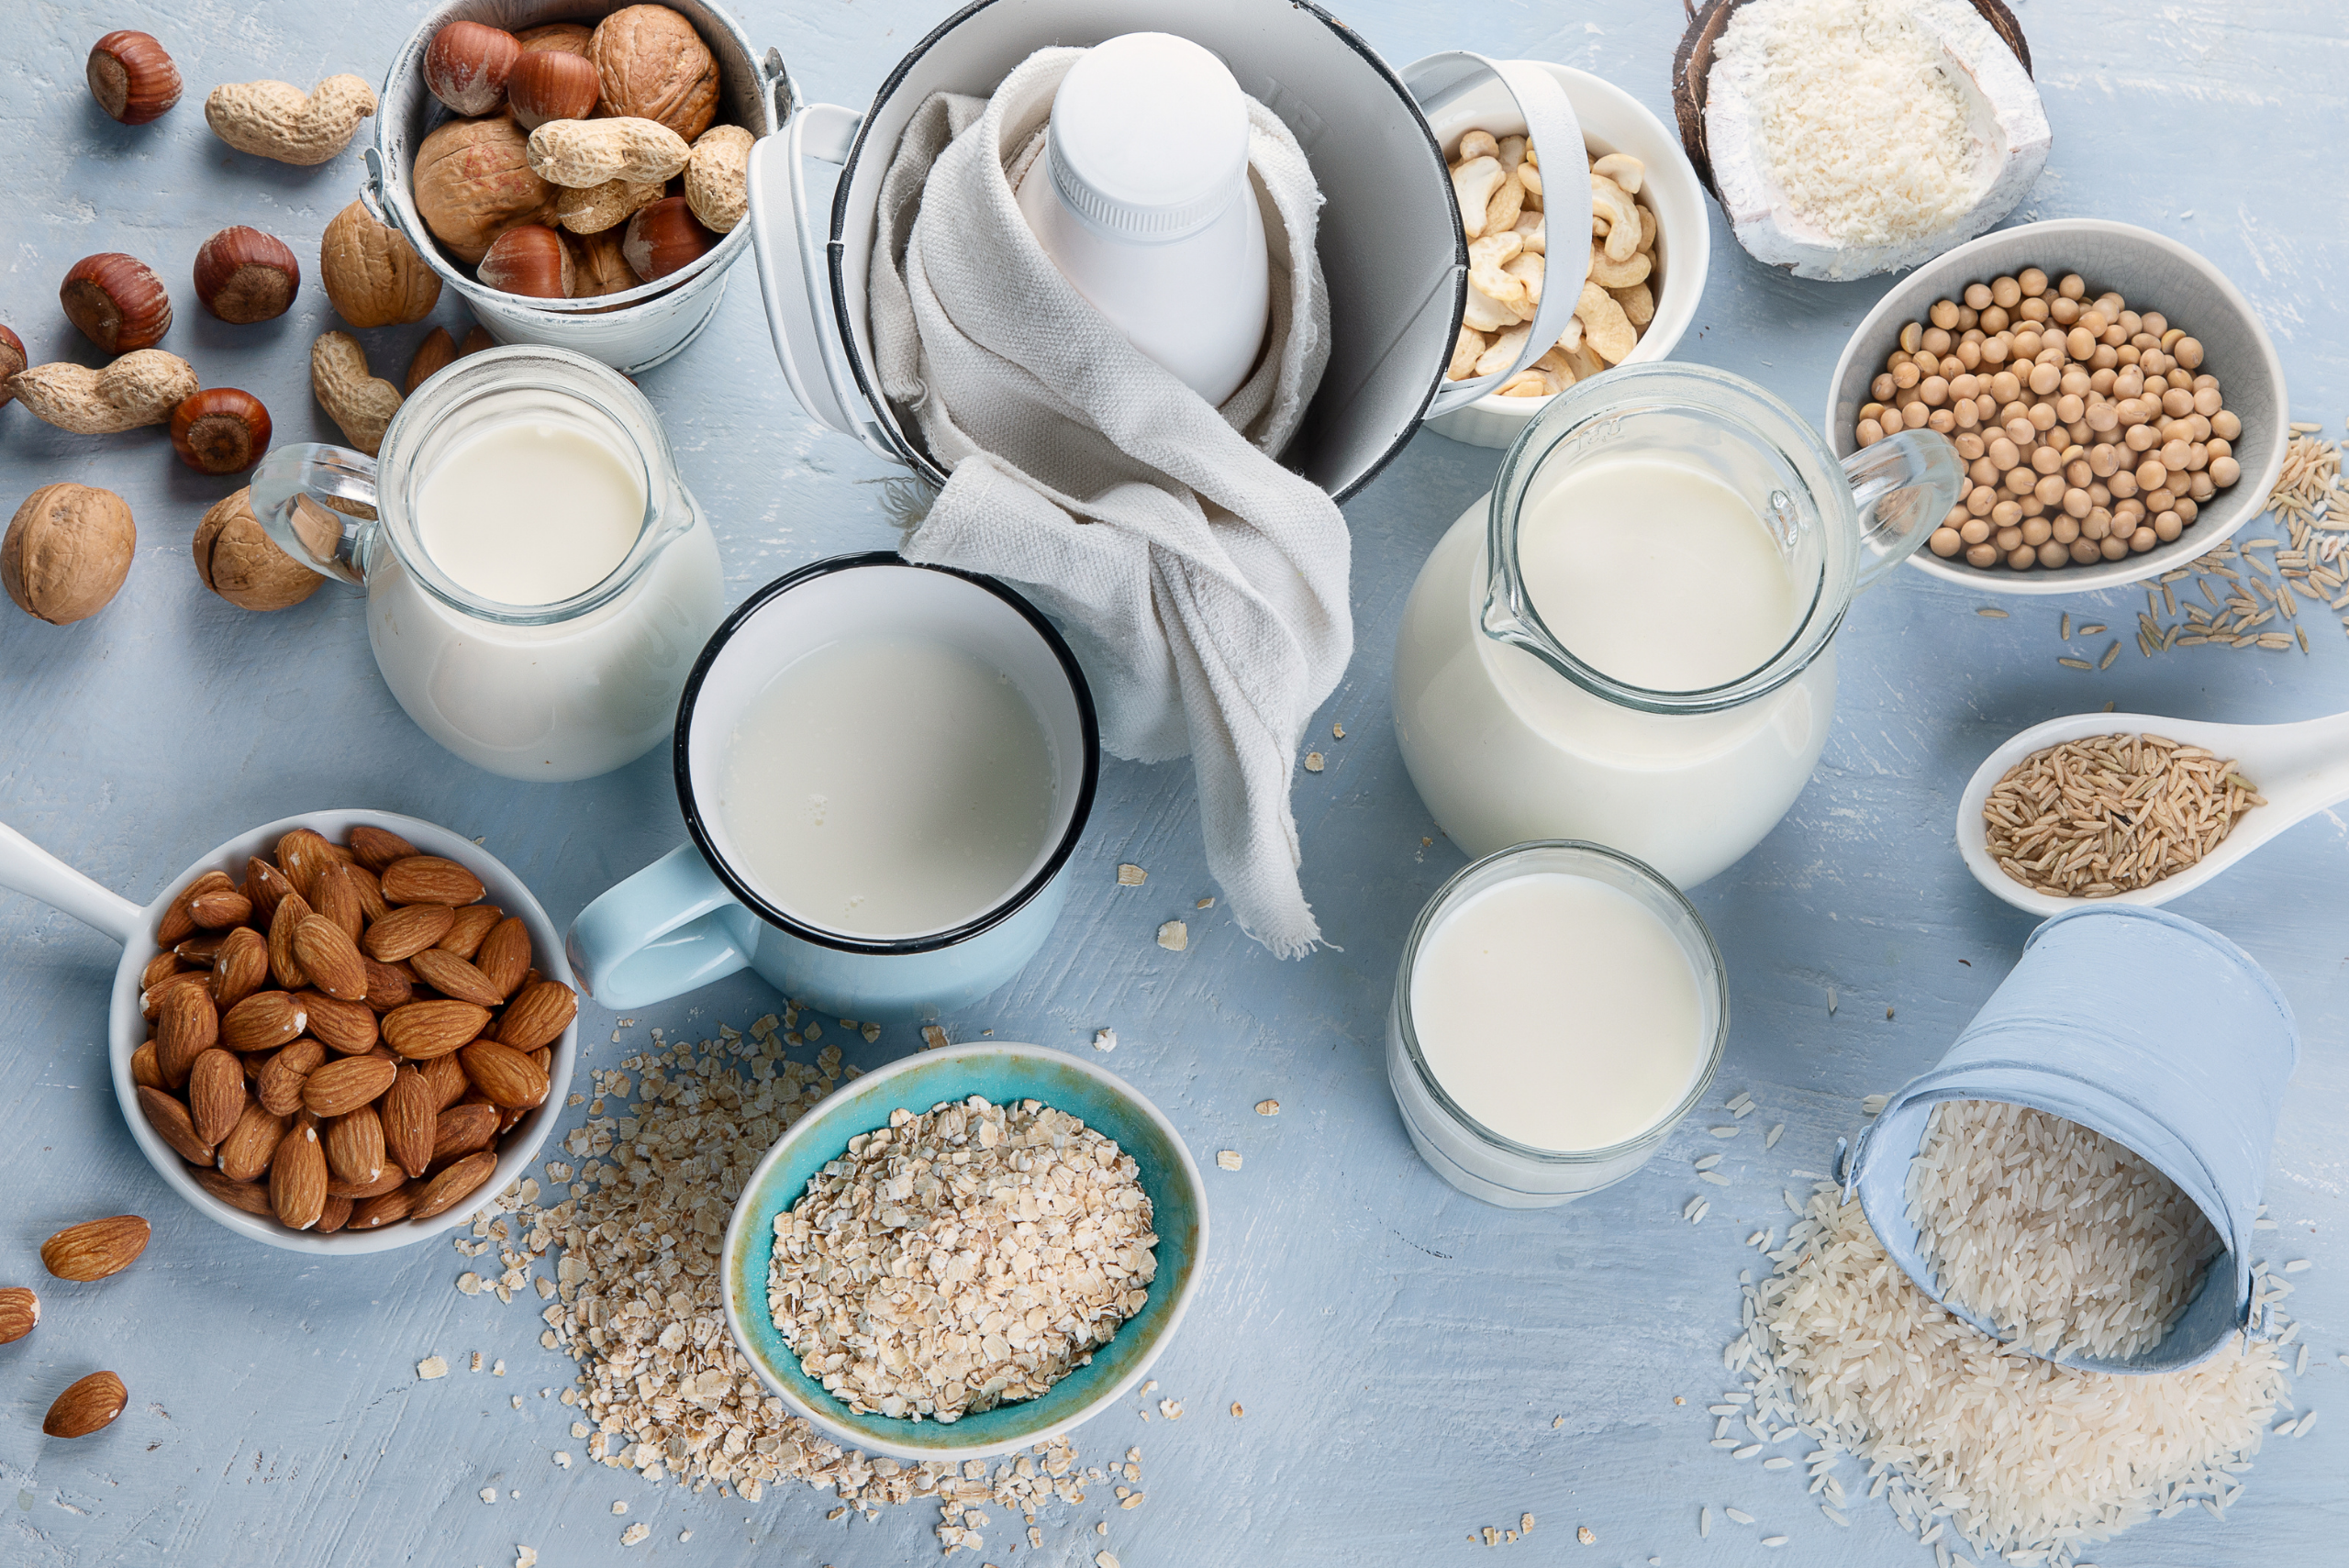 Is Making Plant-Based Milk Worth It? SPOILER: I Struggled!